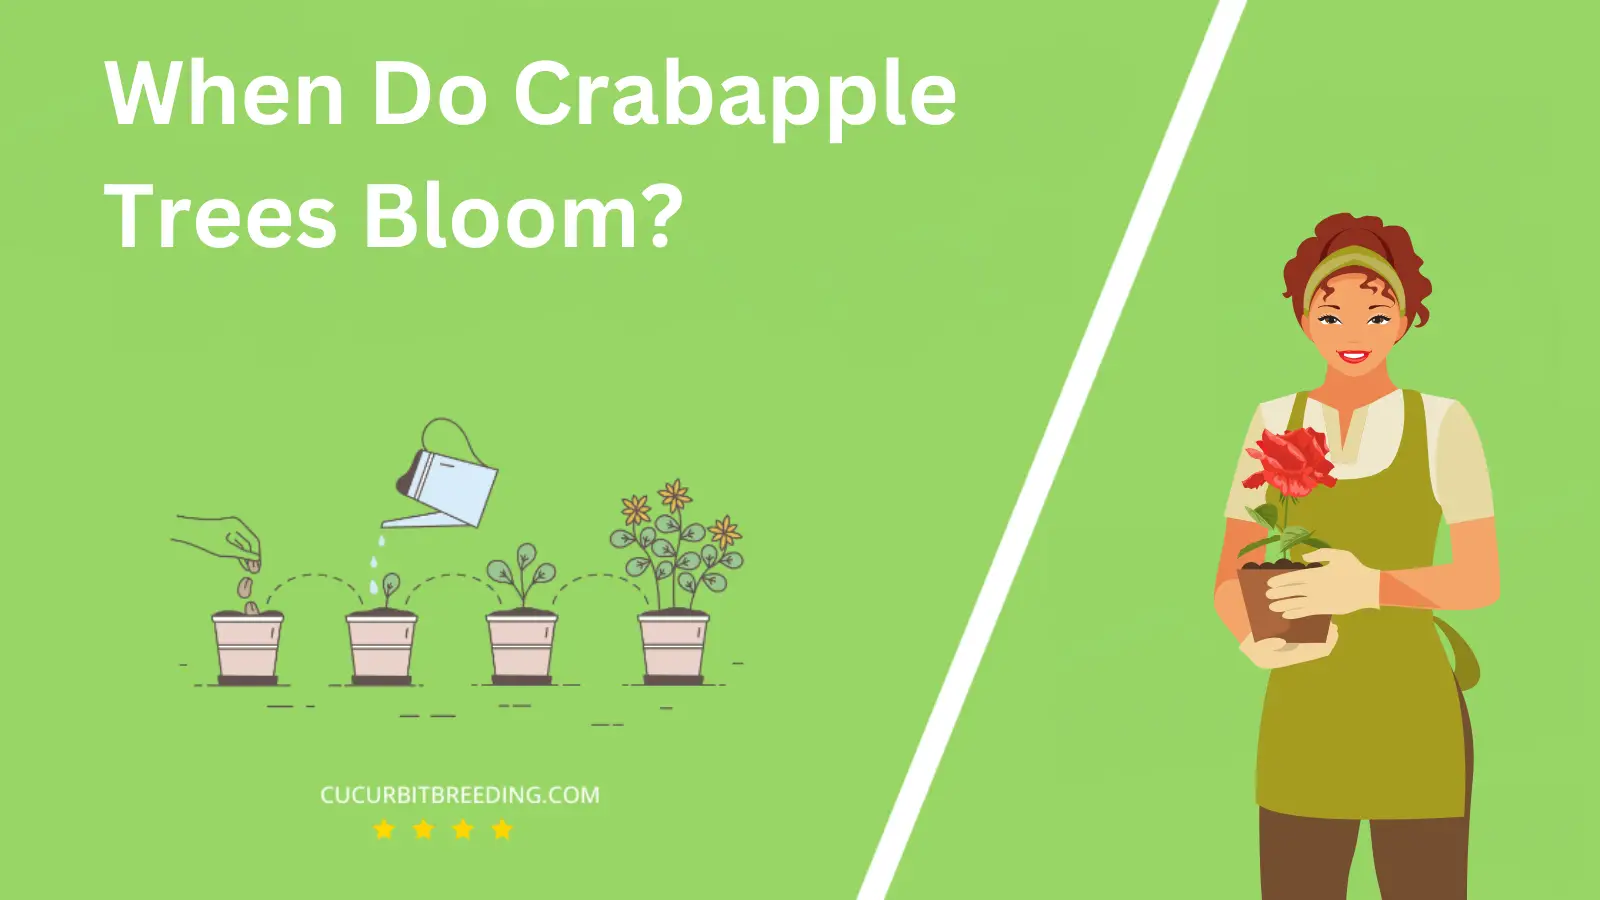 When Do Crabapple Trees Bloom?